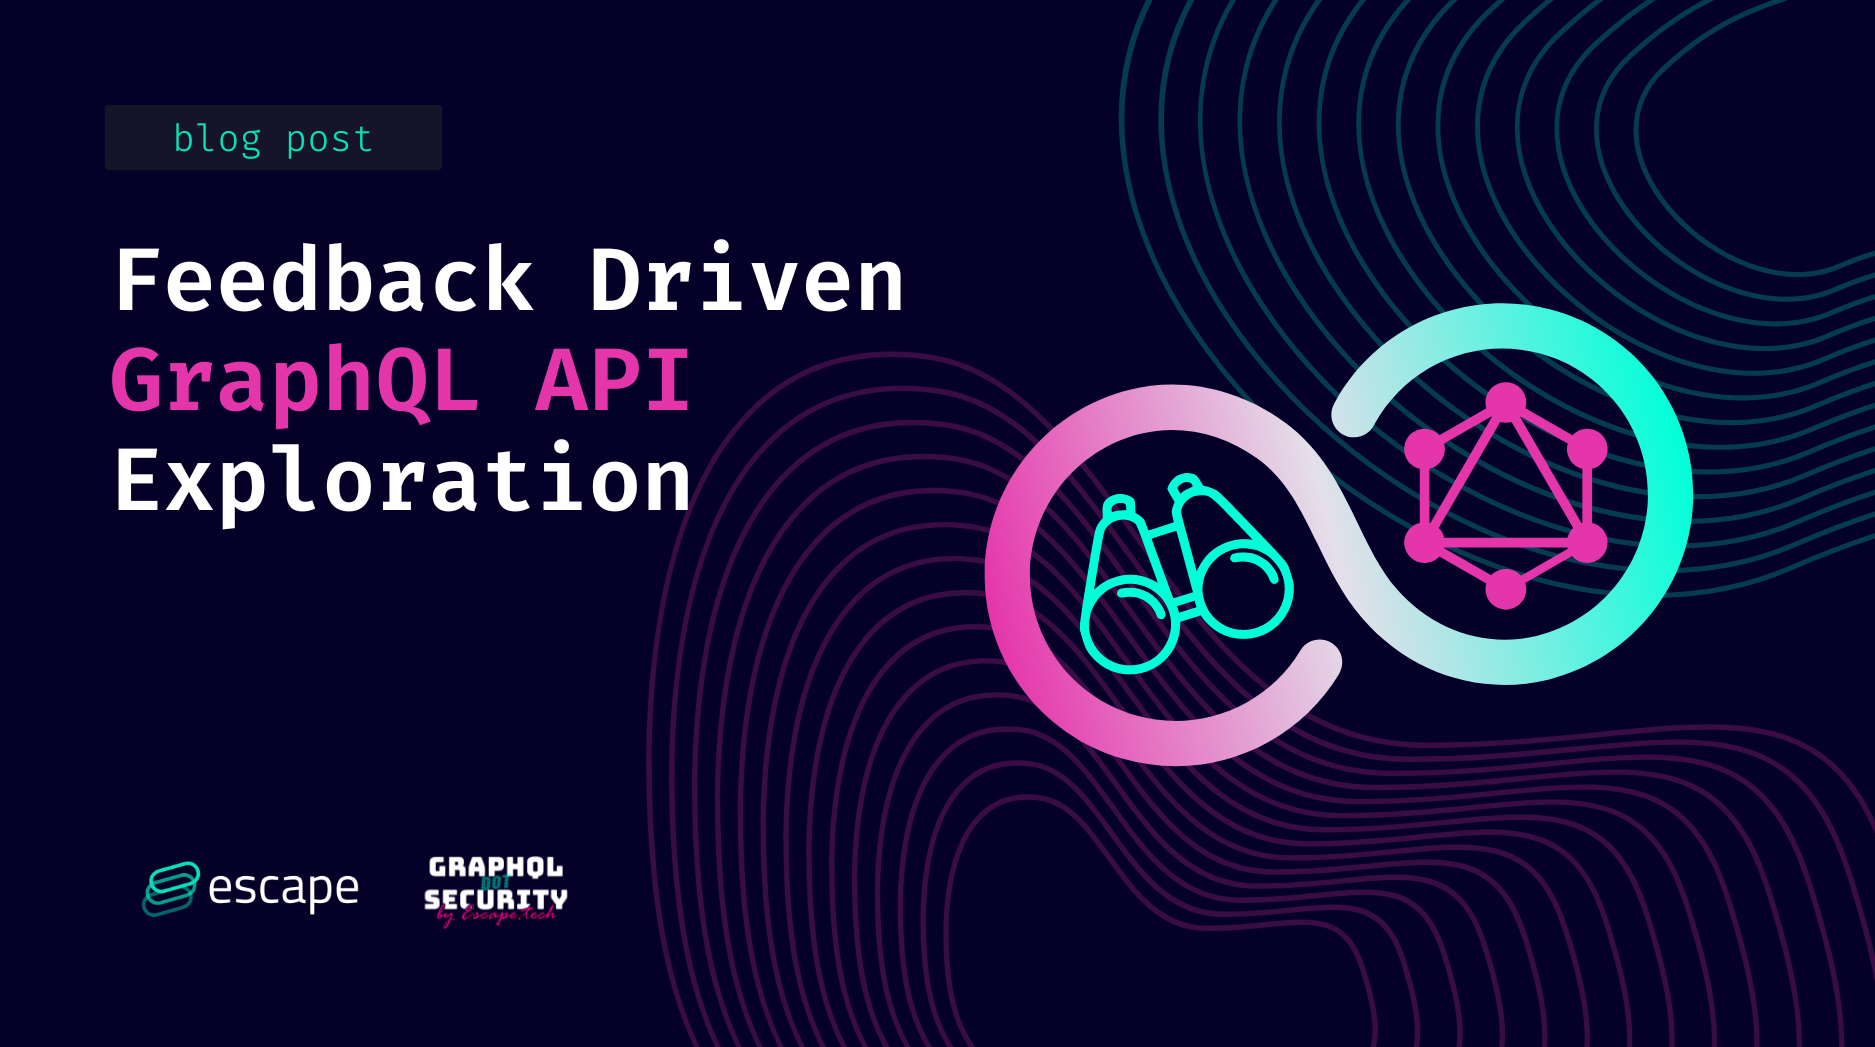 Feedback Driven API exploration at the service of GraphQL Security